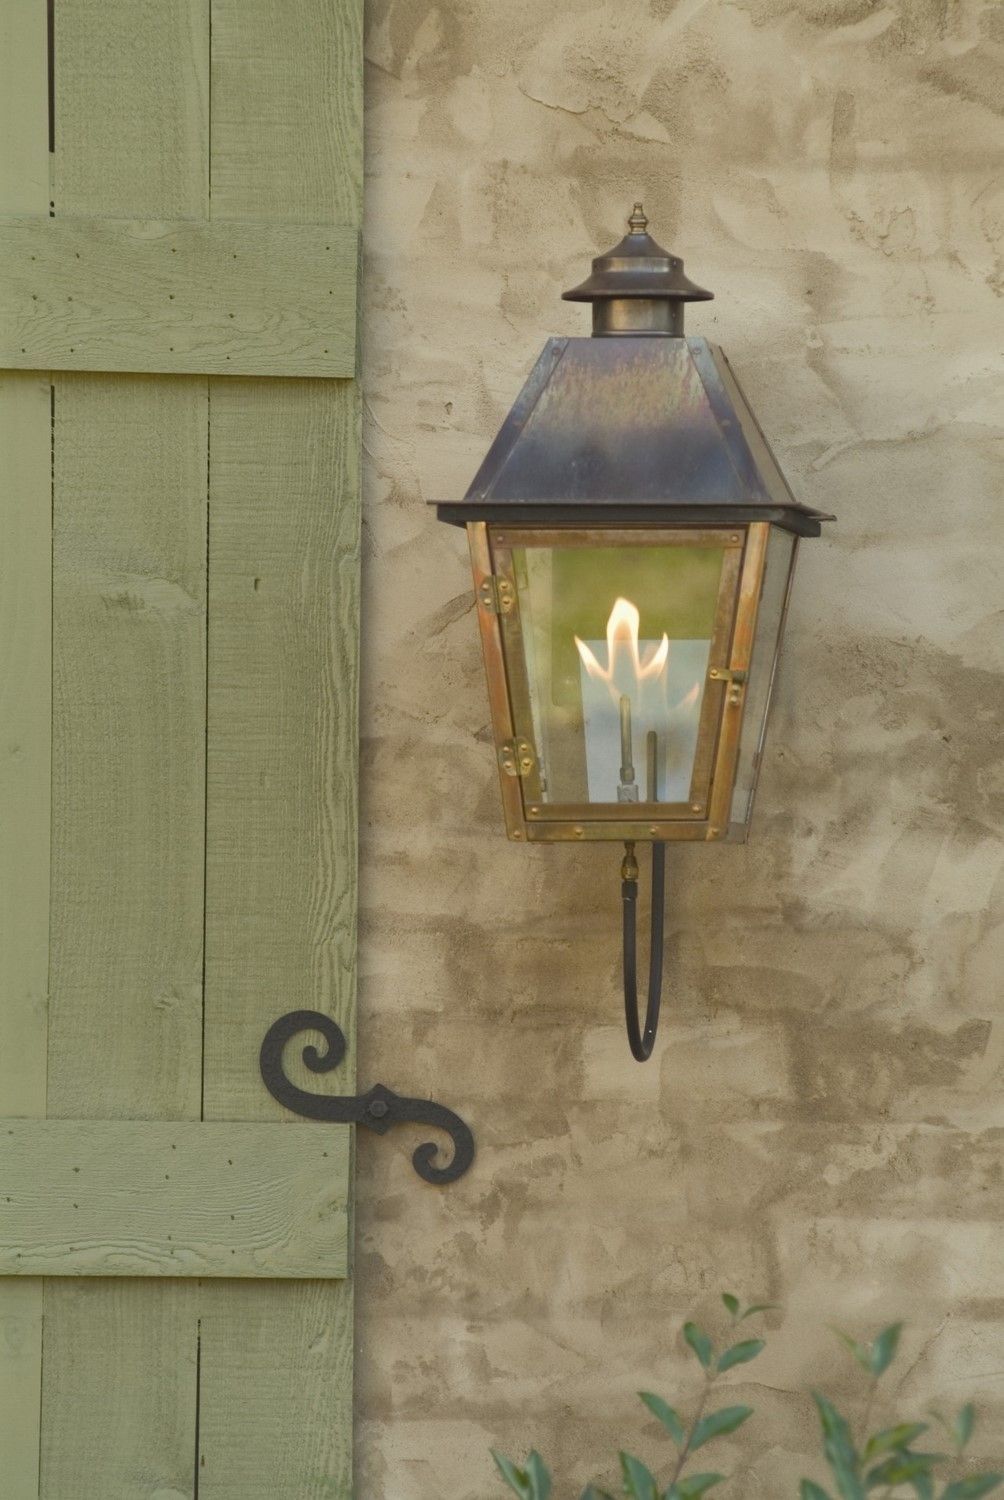 Carolina Lanterns Gas Lamp Atlas Wall Mount | Lighting | Pinterest Intended For Outdoor Wall Gas Lights (Photo 2 of 15)